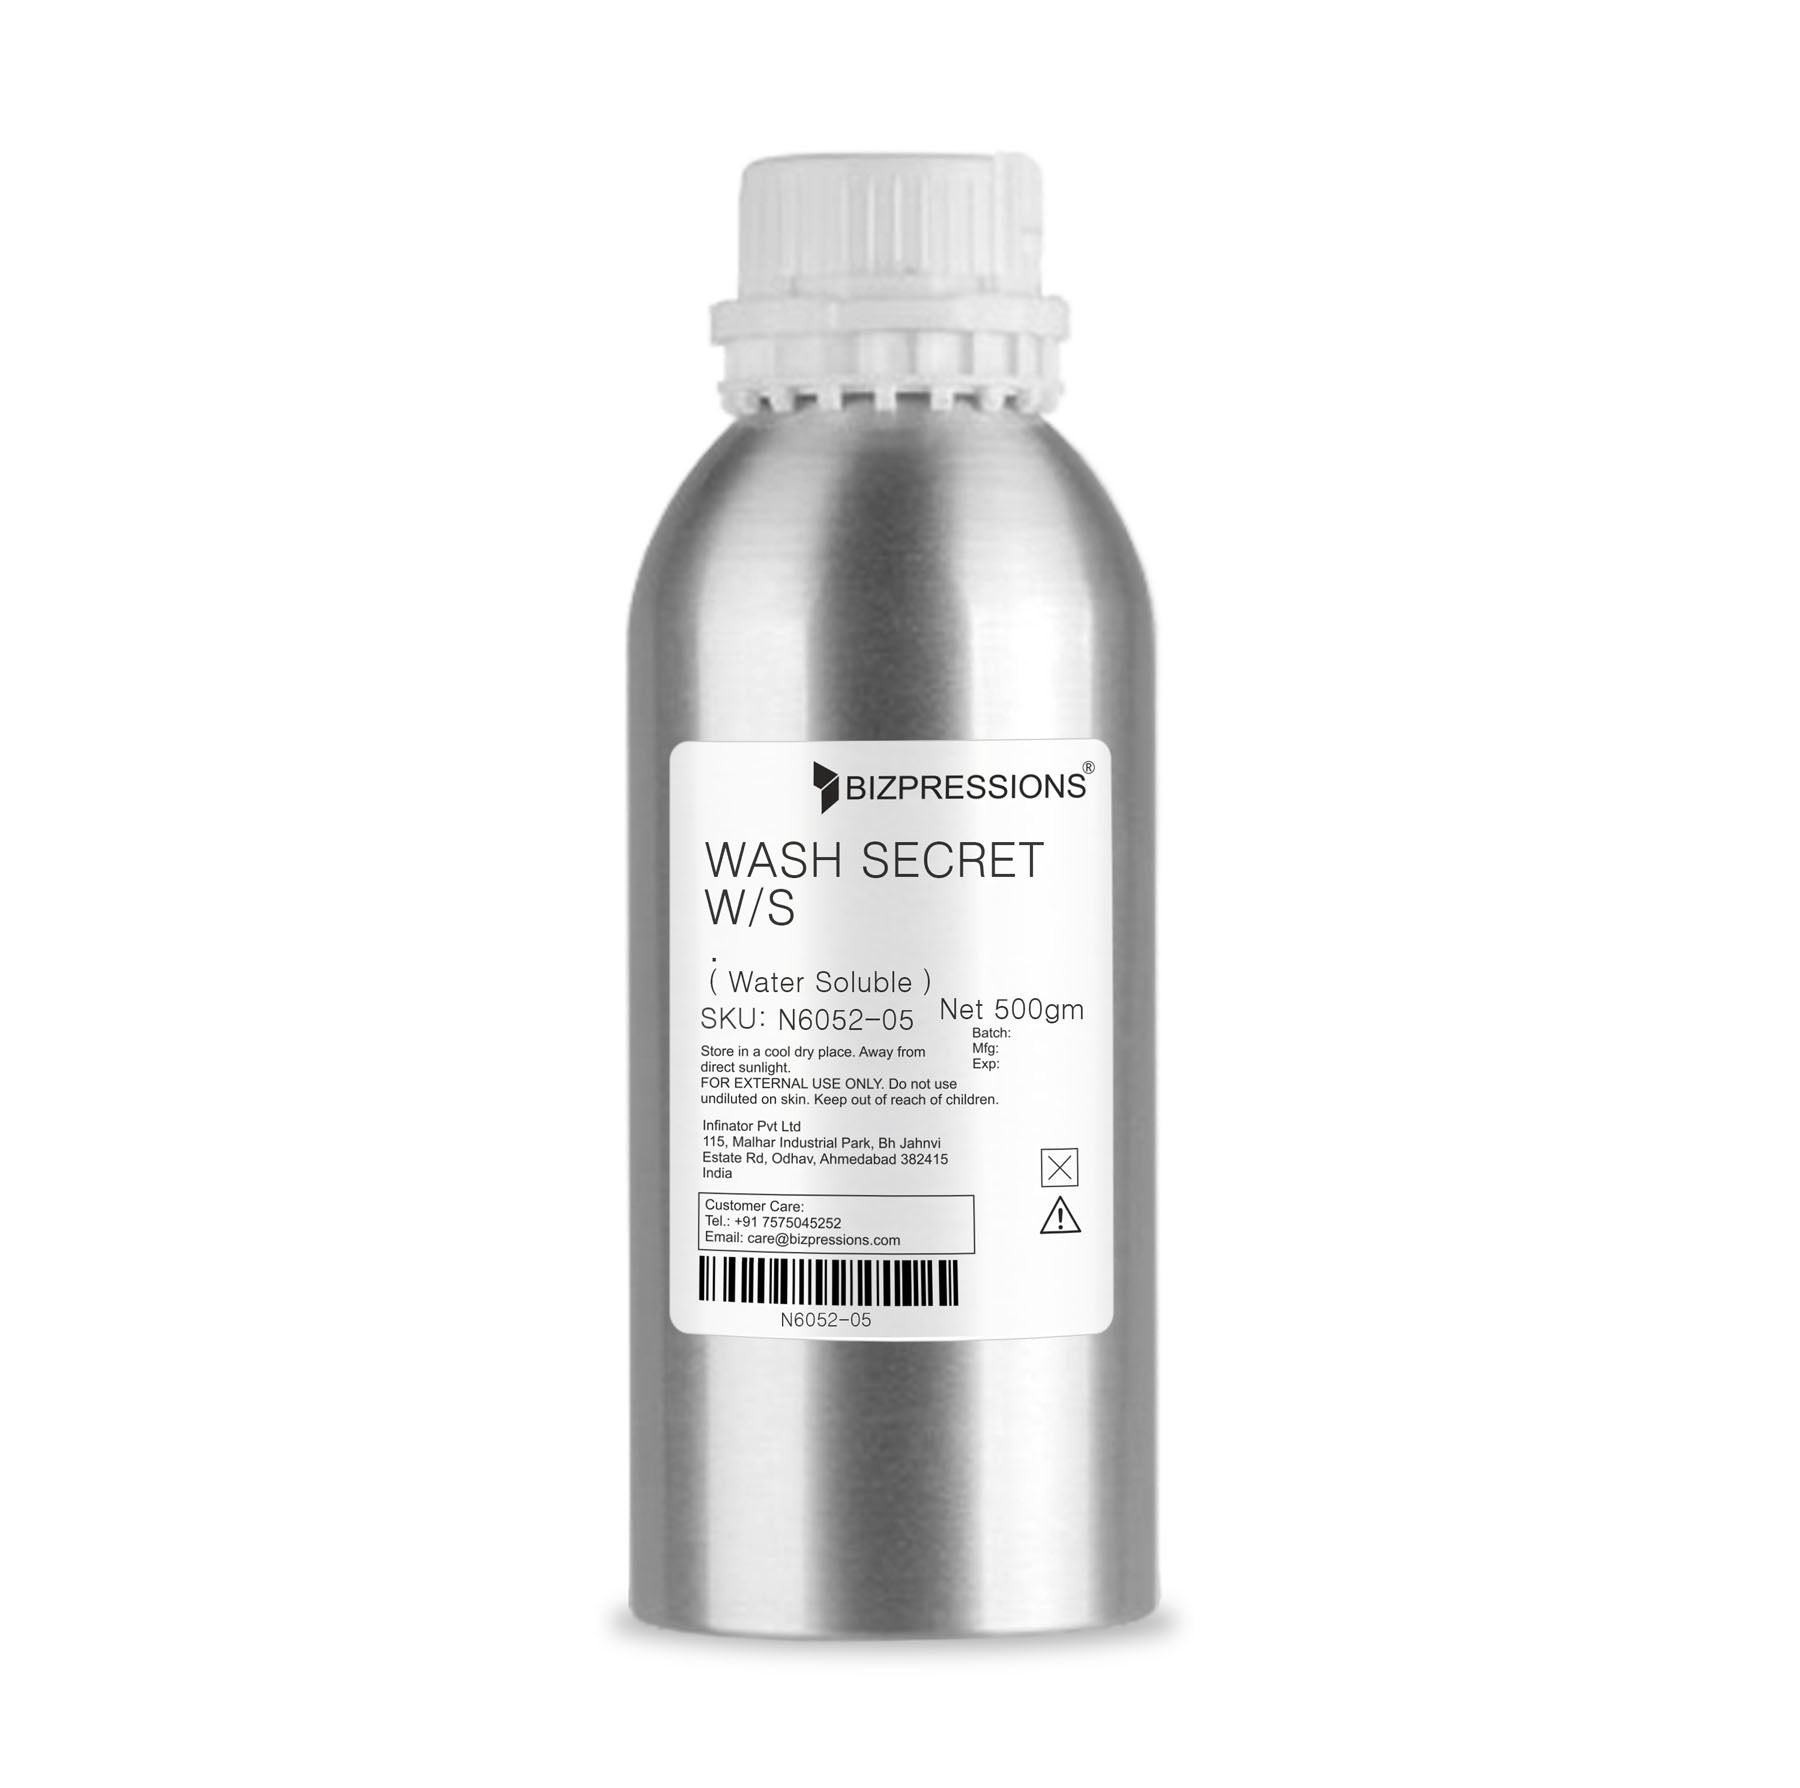 WASH SECRET W/S - Fragrance ( Water Soluble ) - 500 gm